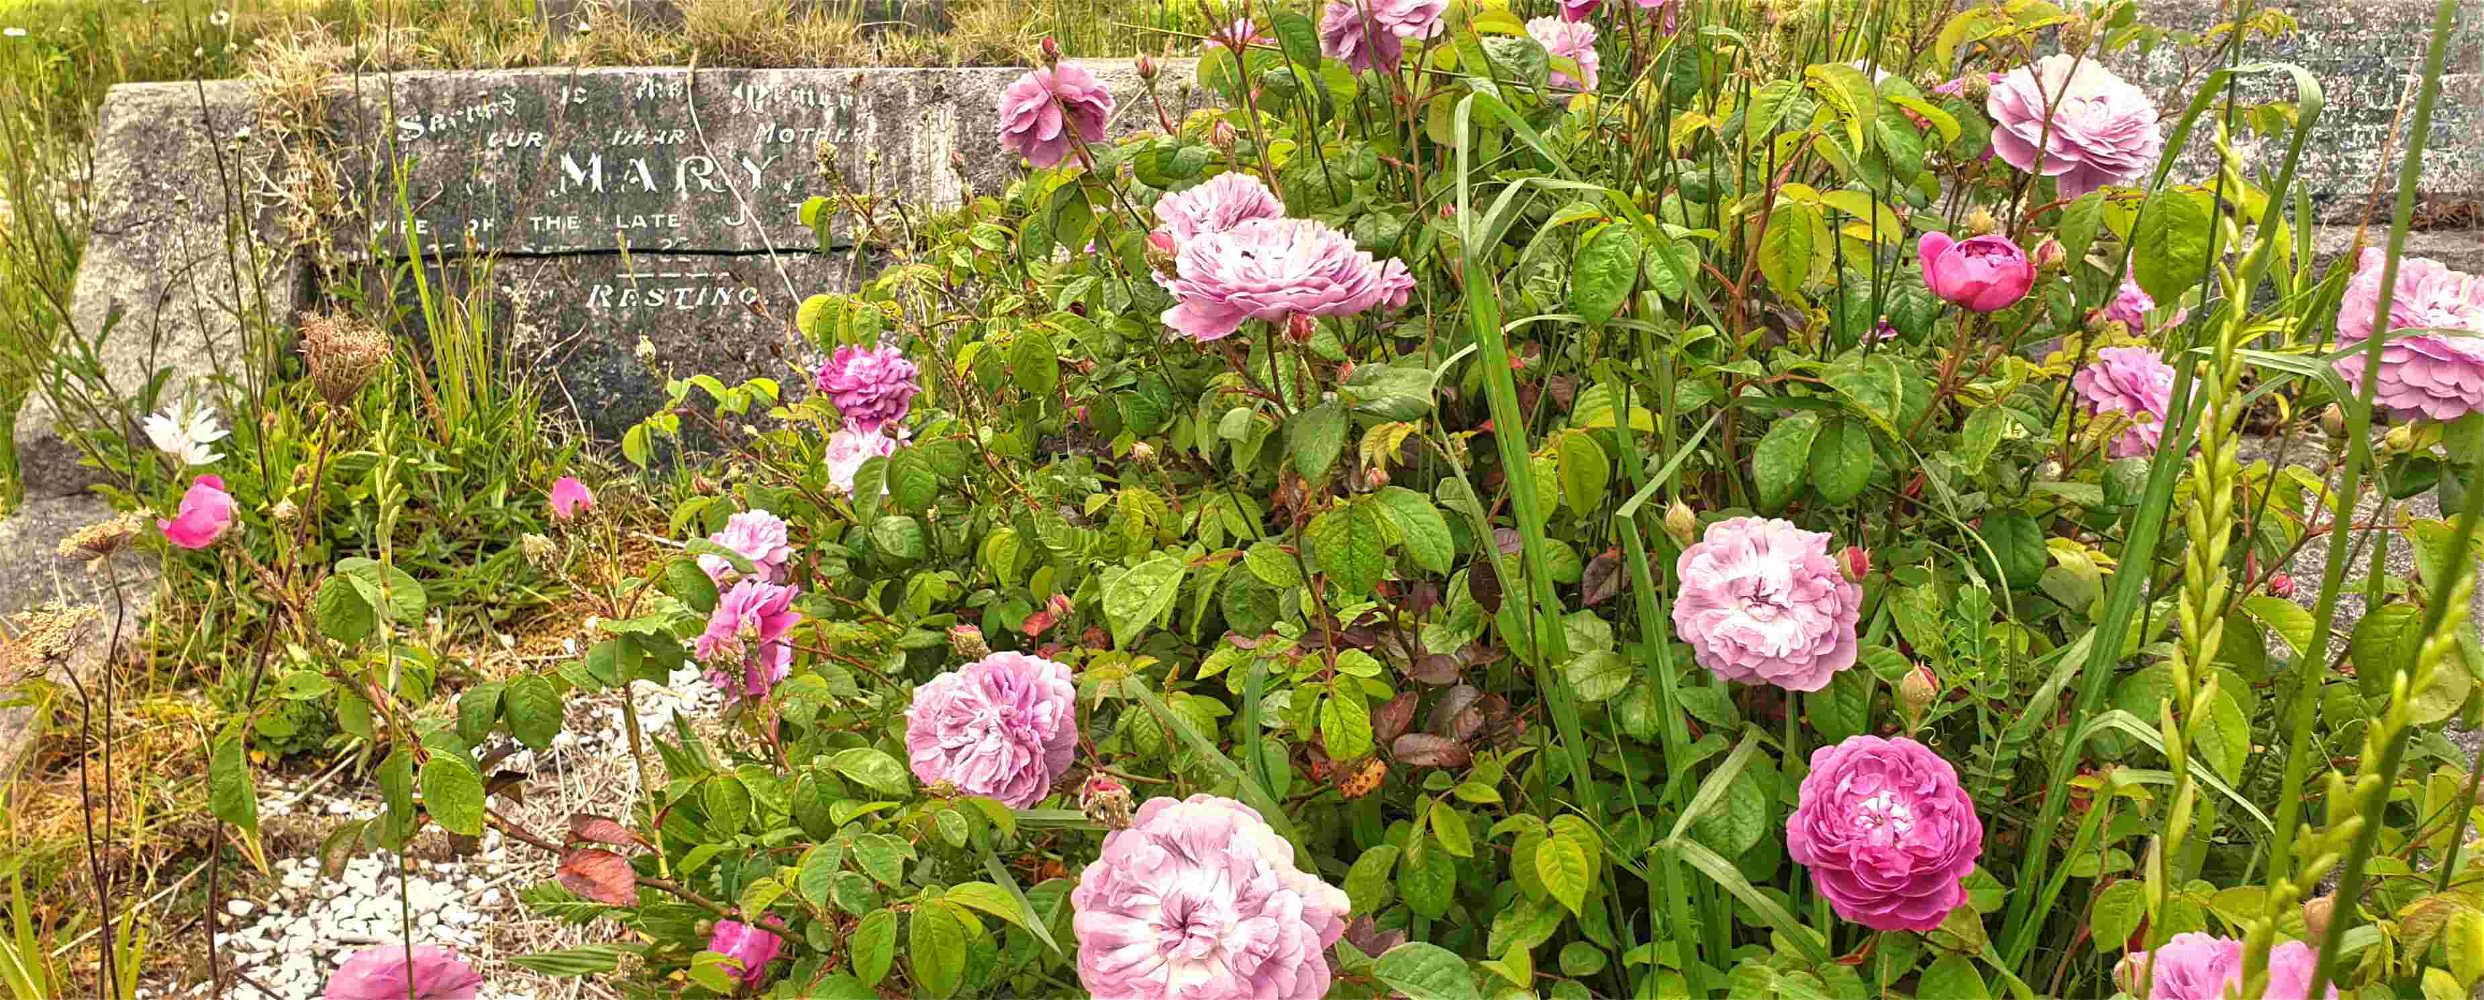 Heady nineteenth century roses, Waikumete cemetery, Auckland, New Zealand